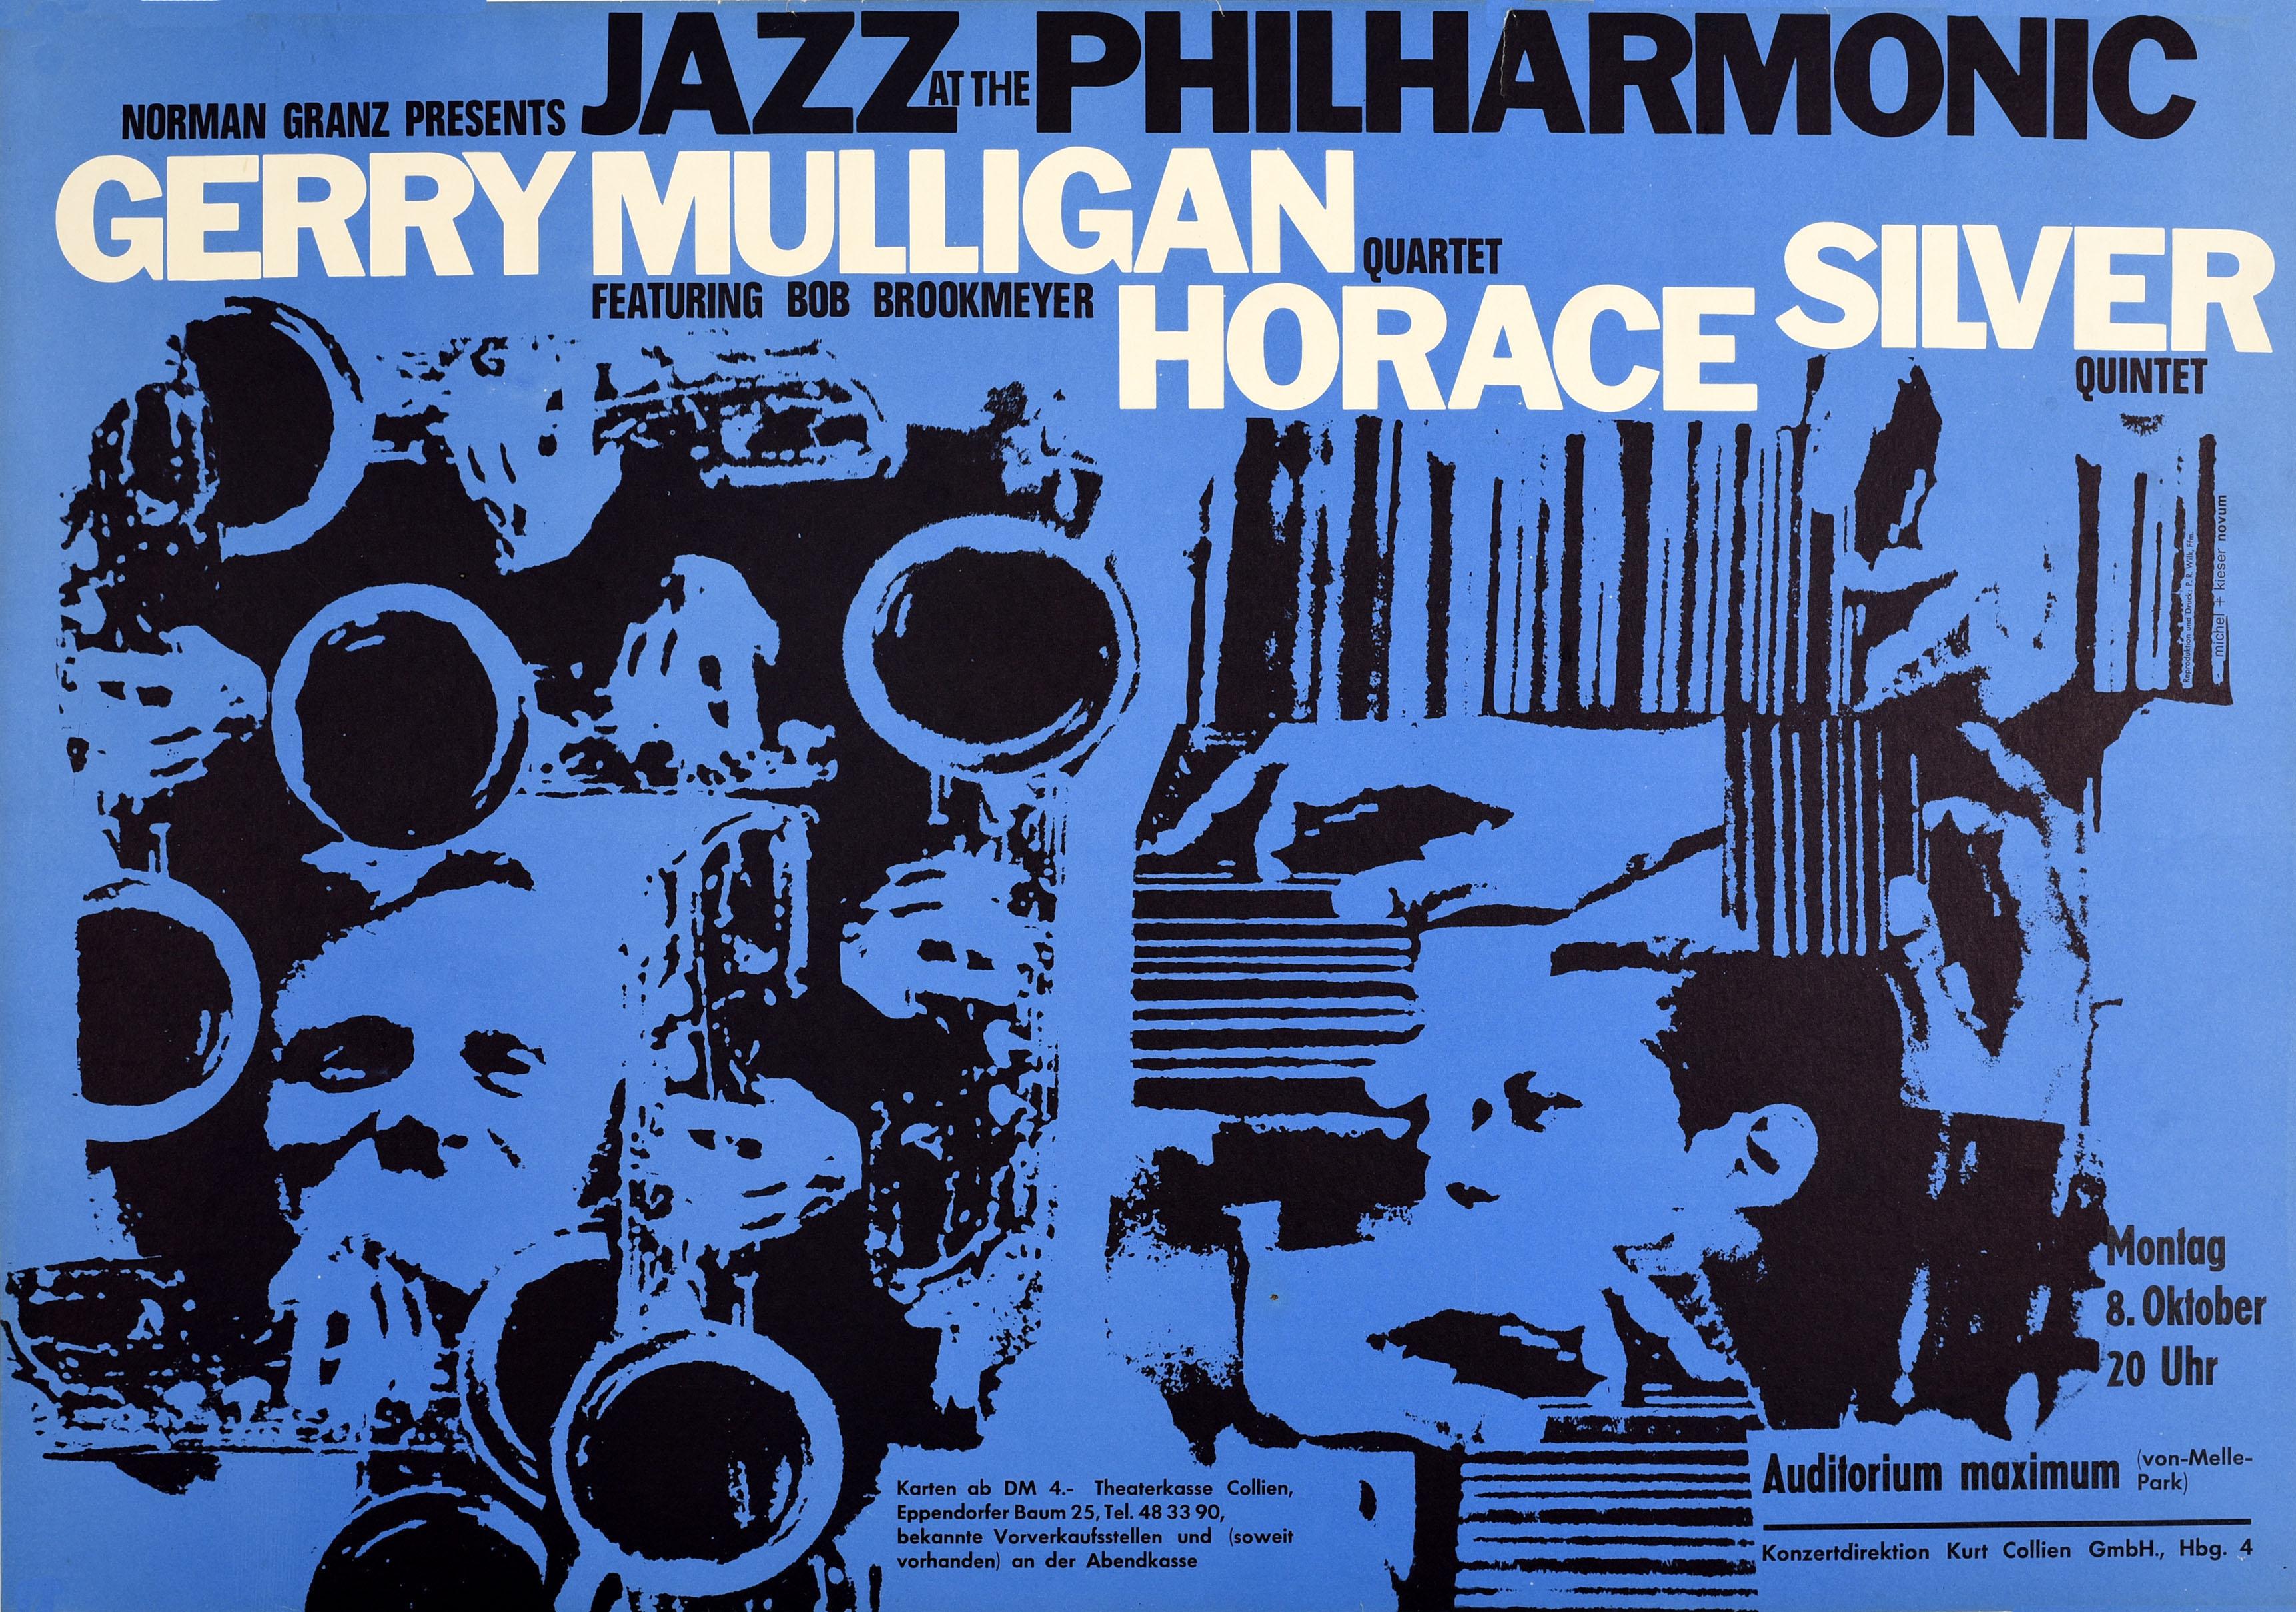 Günther Kieser Print – Original Vintage-Musikplakat „ Norman Granz präsentiert Jazz bei der Philharmonic Art“